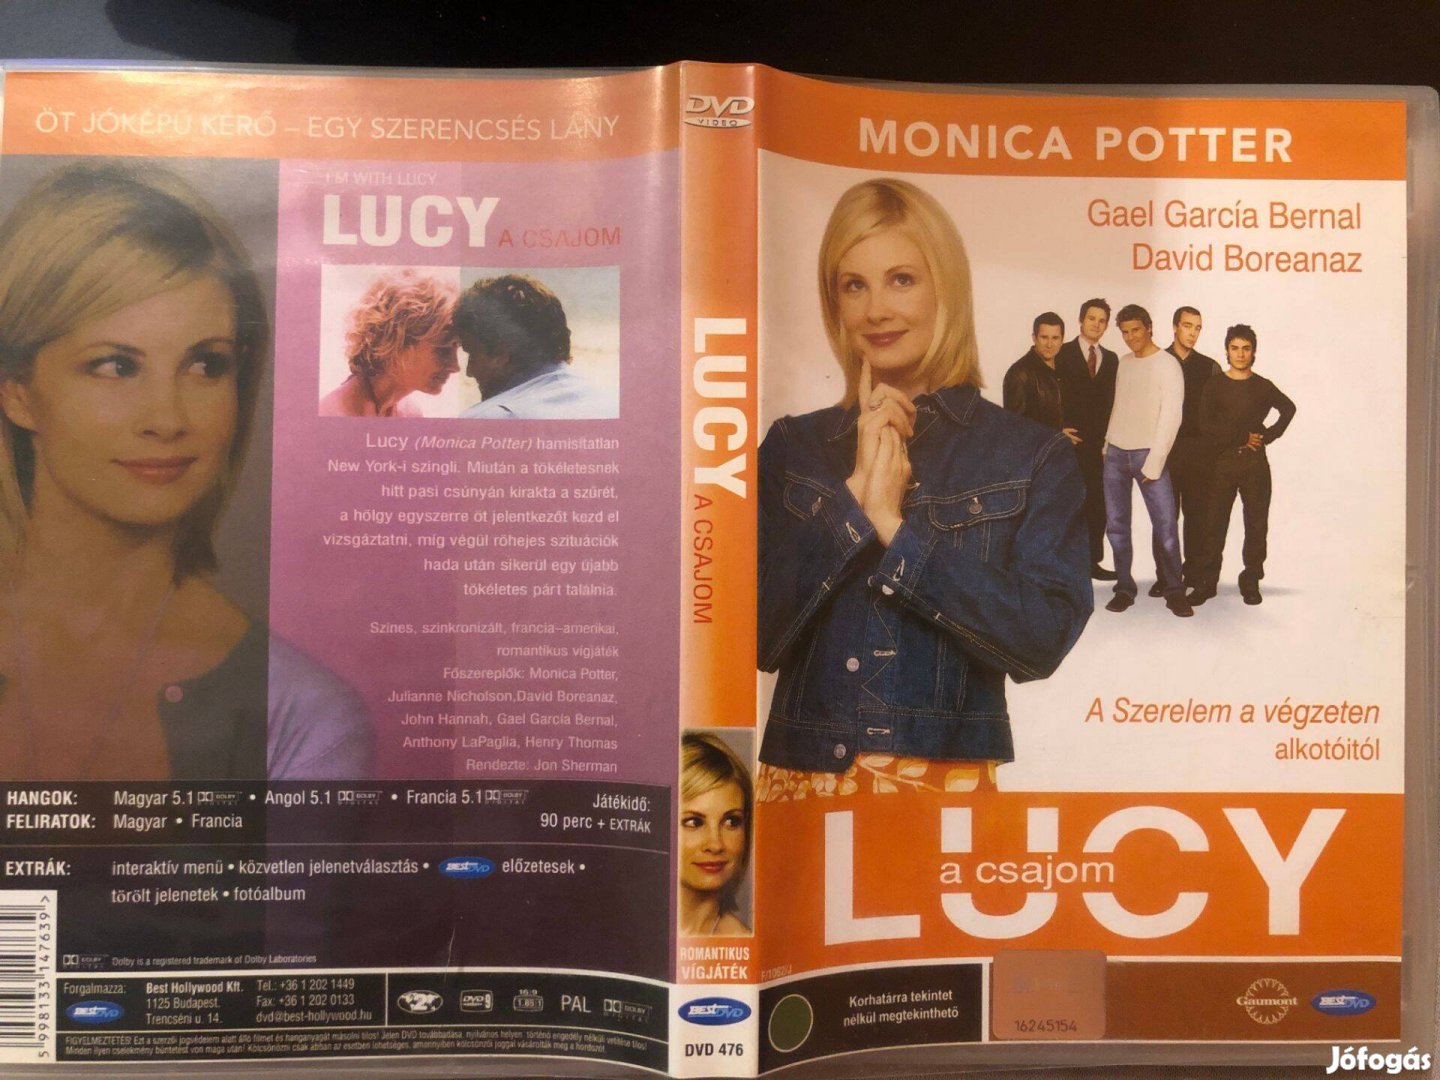 Lucy a csajom (karcmentes, Monica Potter) DVD